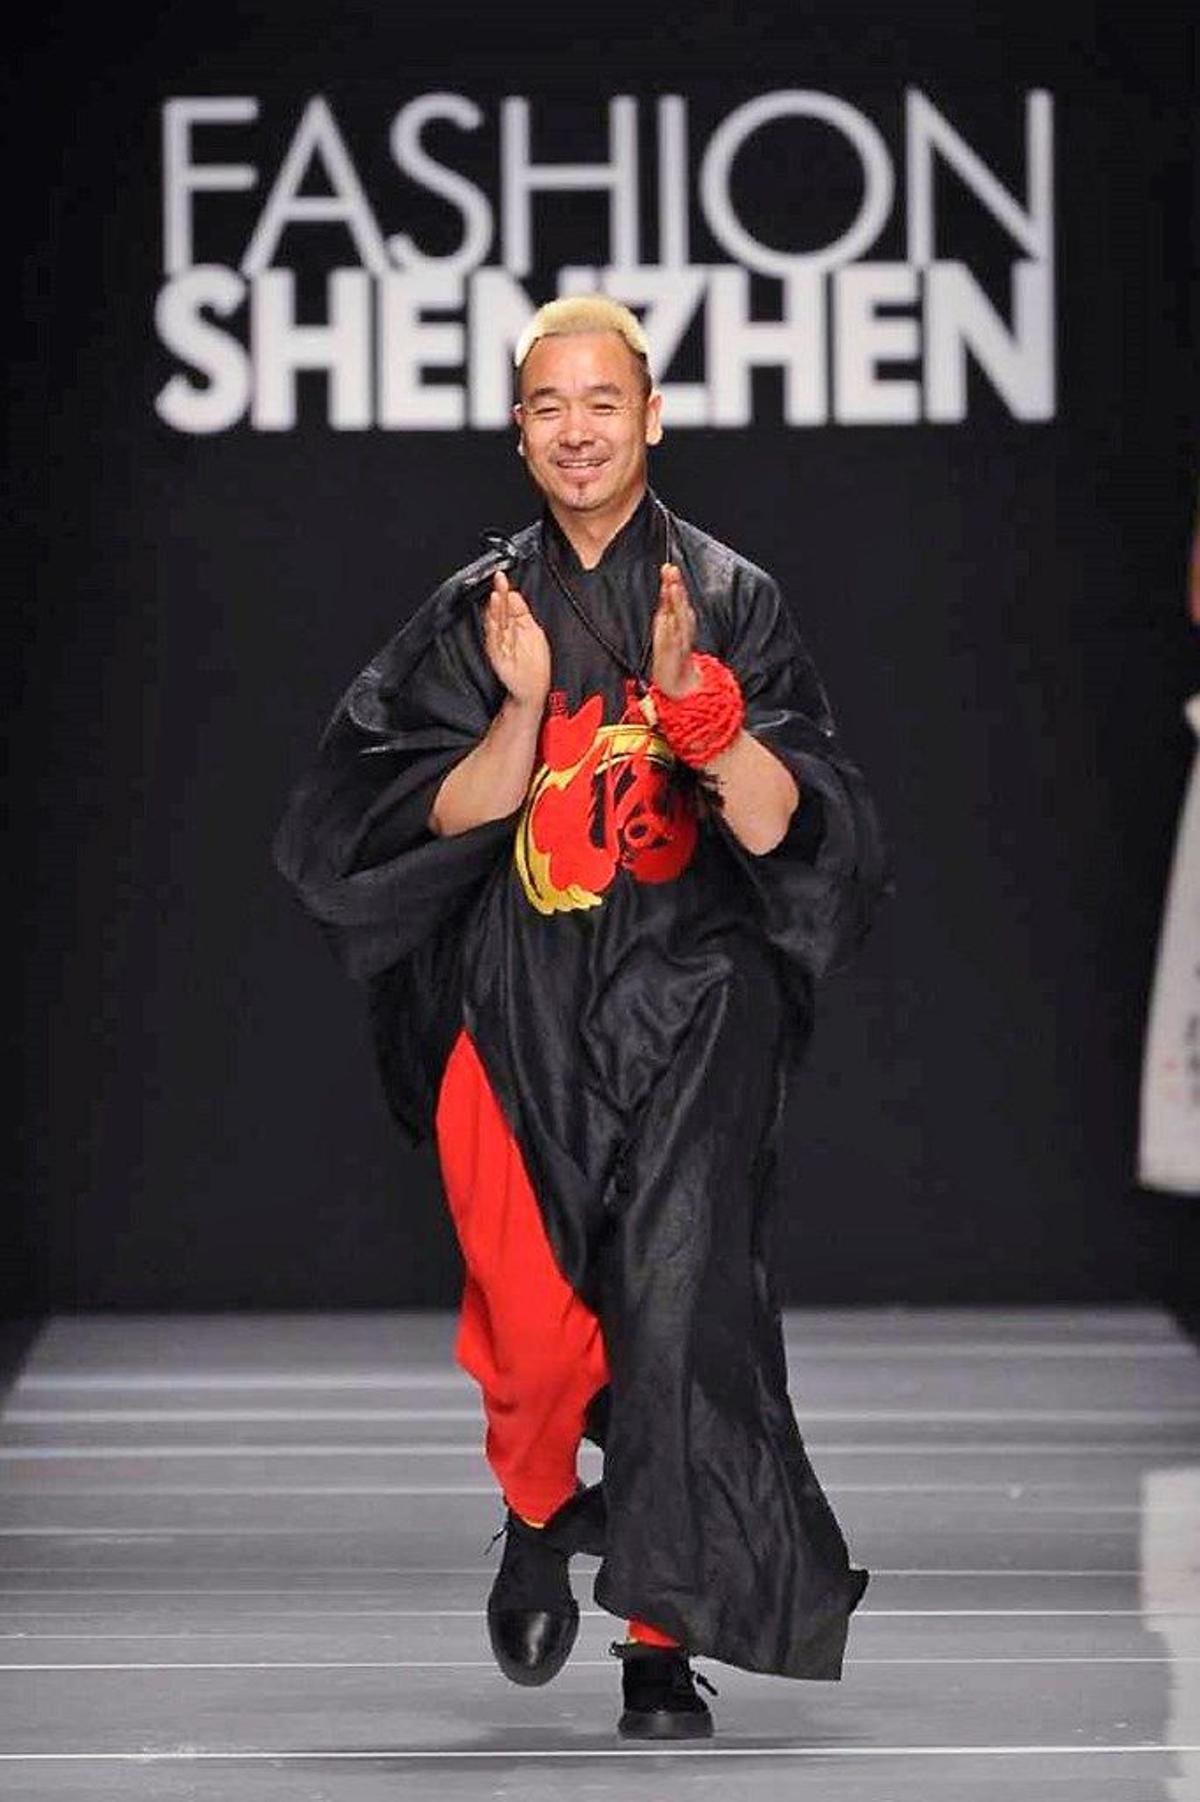 Fashion Shenzhen